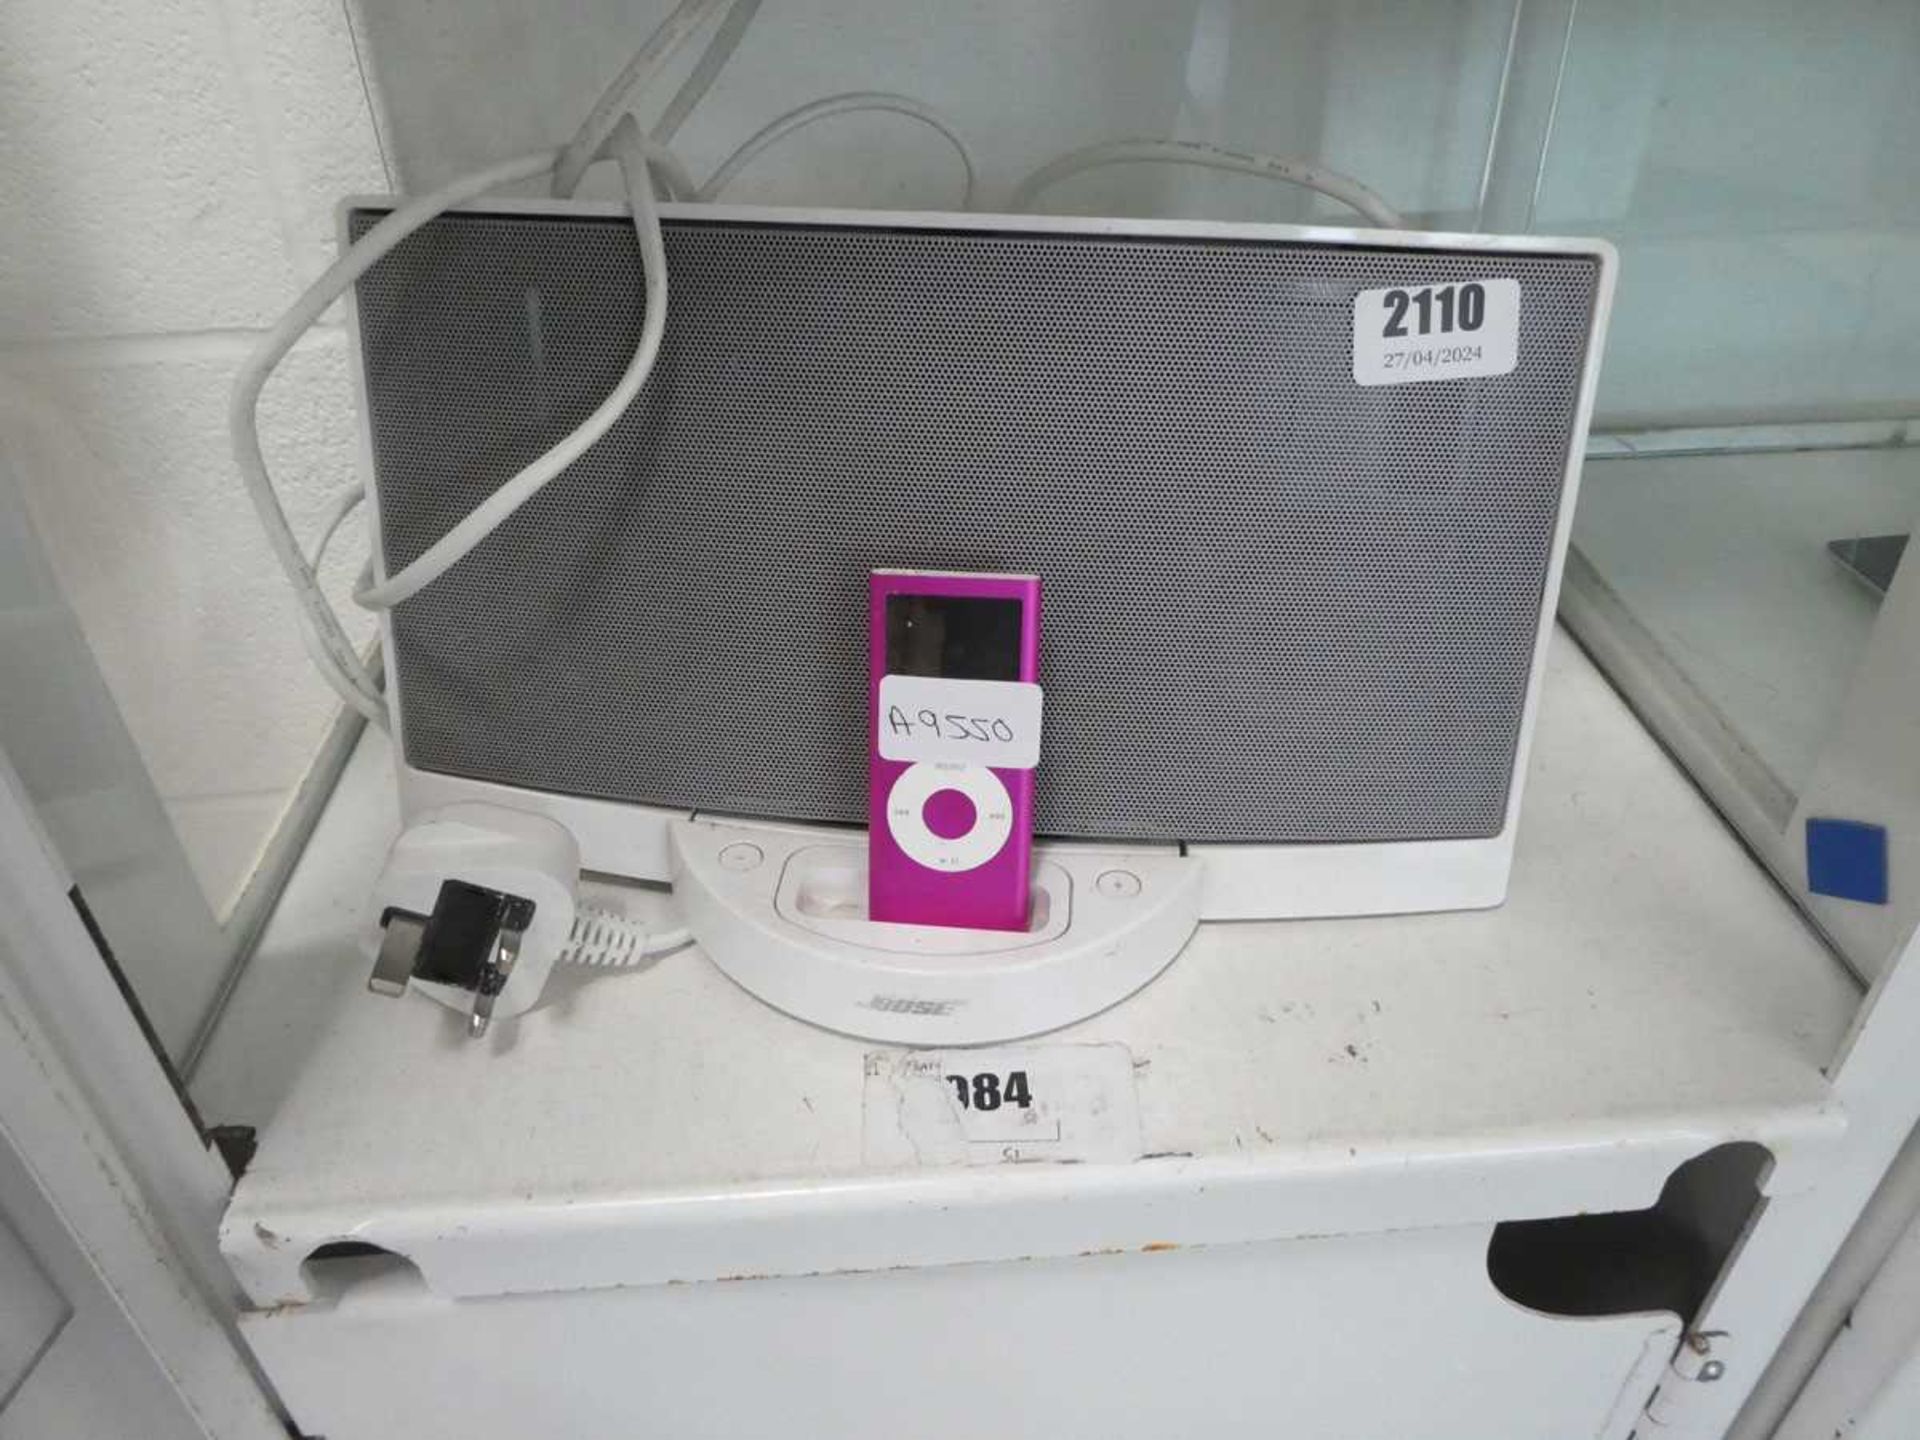 Bose iPod dock with iPod